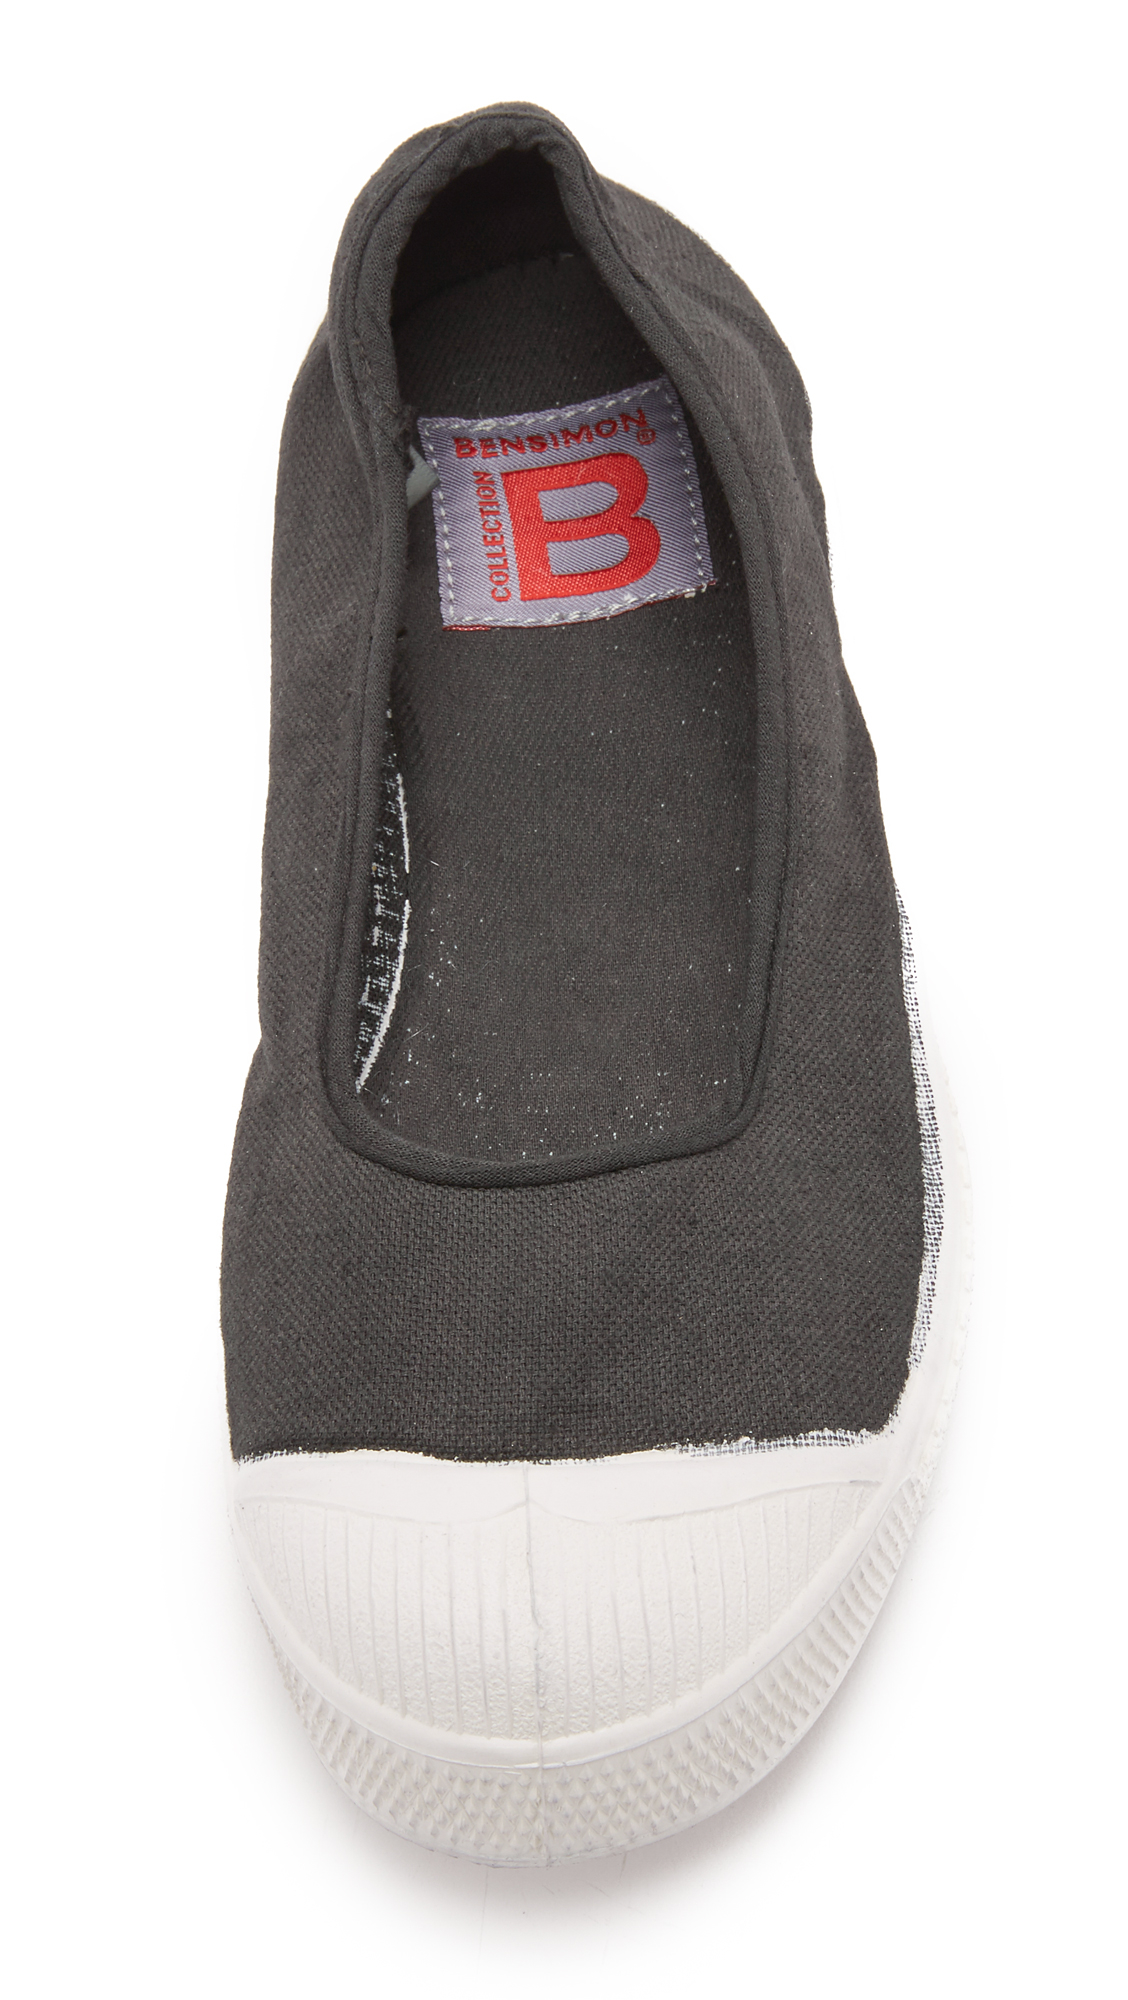 Bensimon Canvas Tennis Ballerina Sneakers in Carbon (White) - Lyst